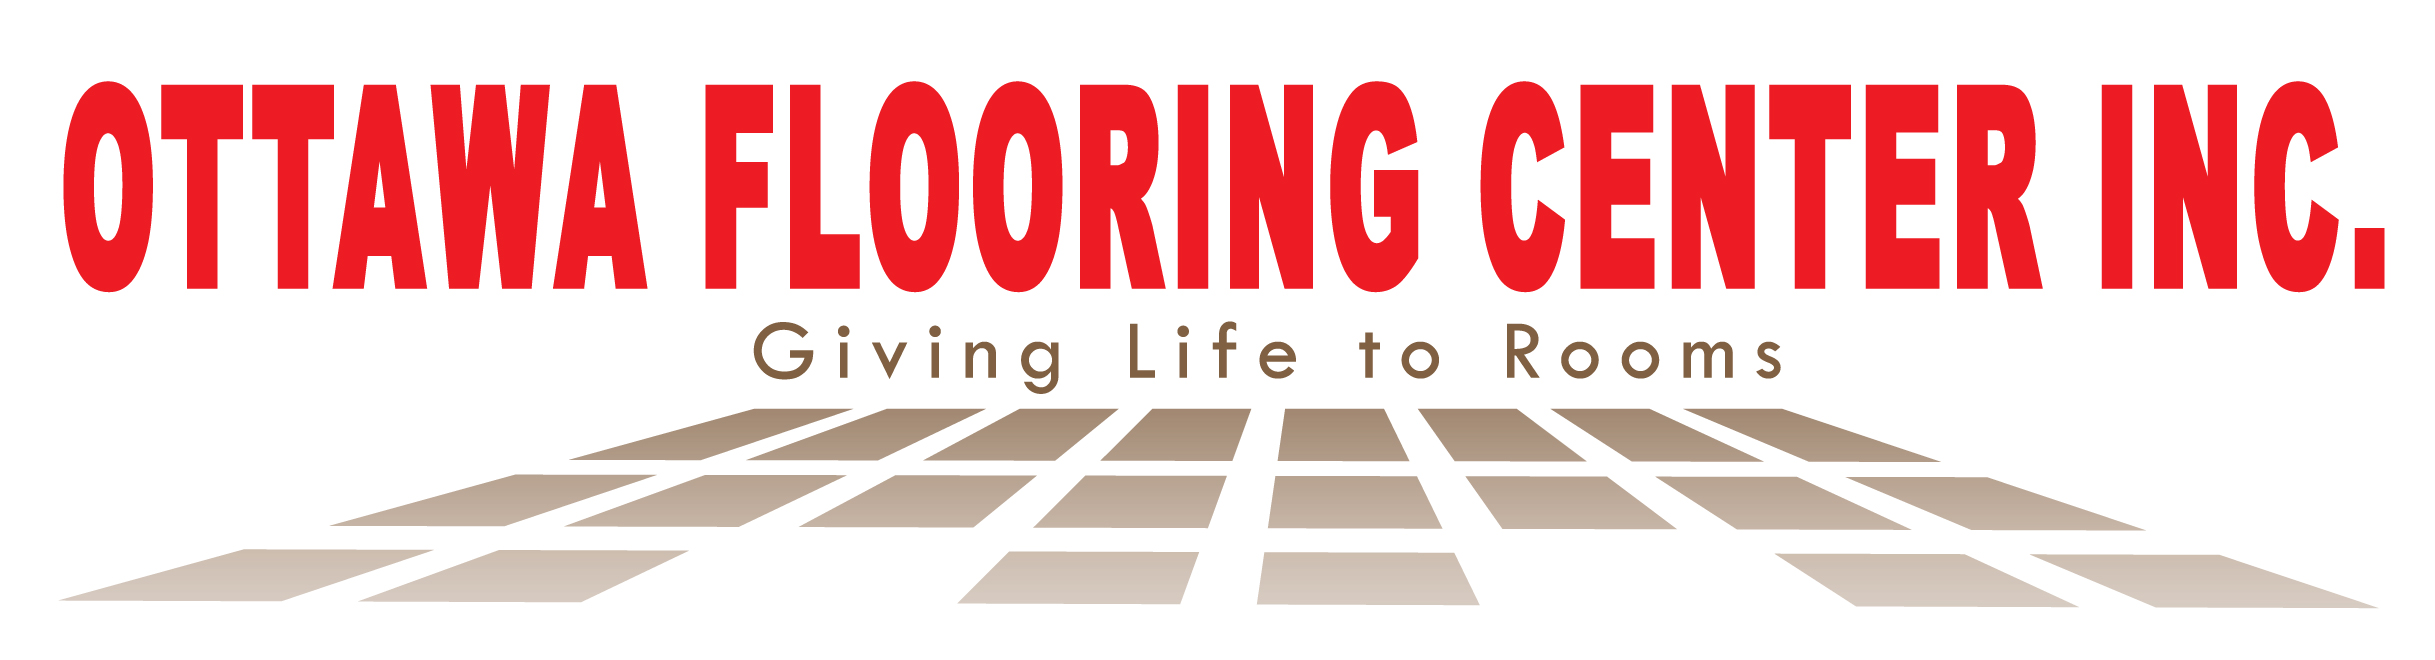 Ottawa Flooring Center Inc